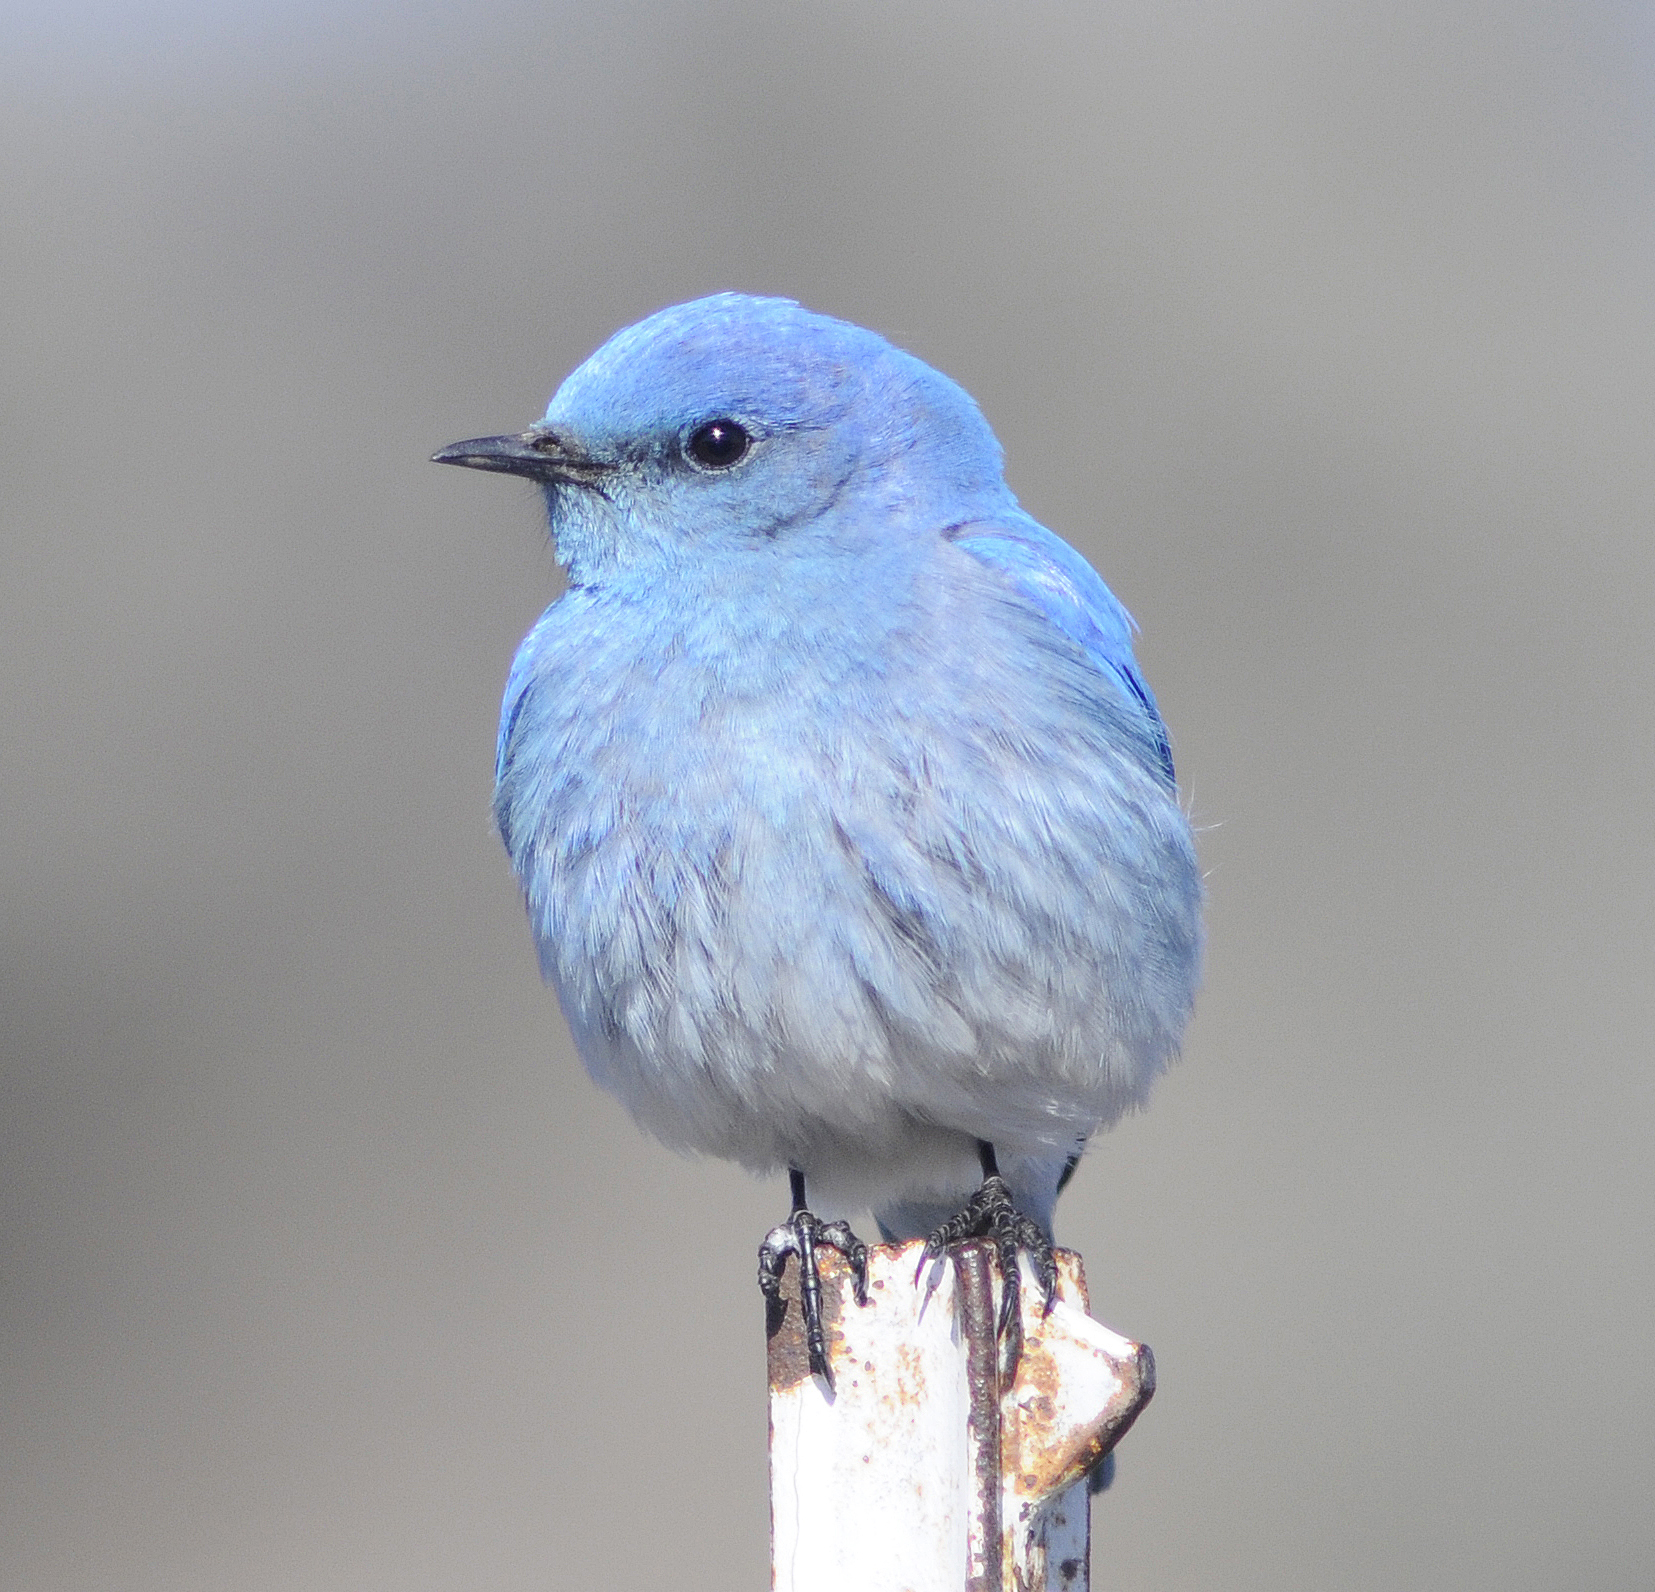 Symbolic representations of blue birds